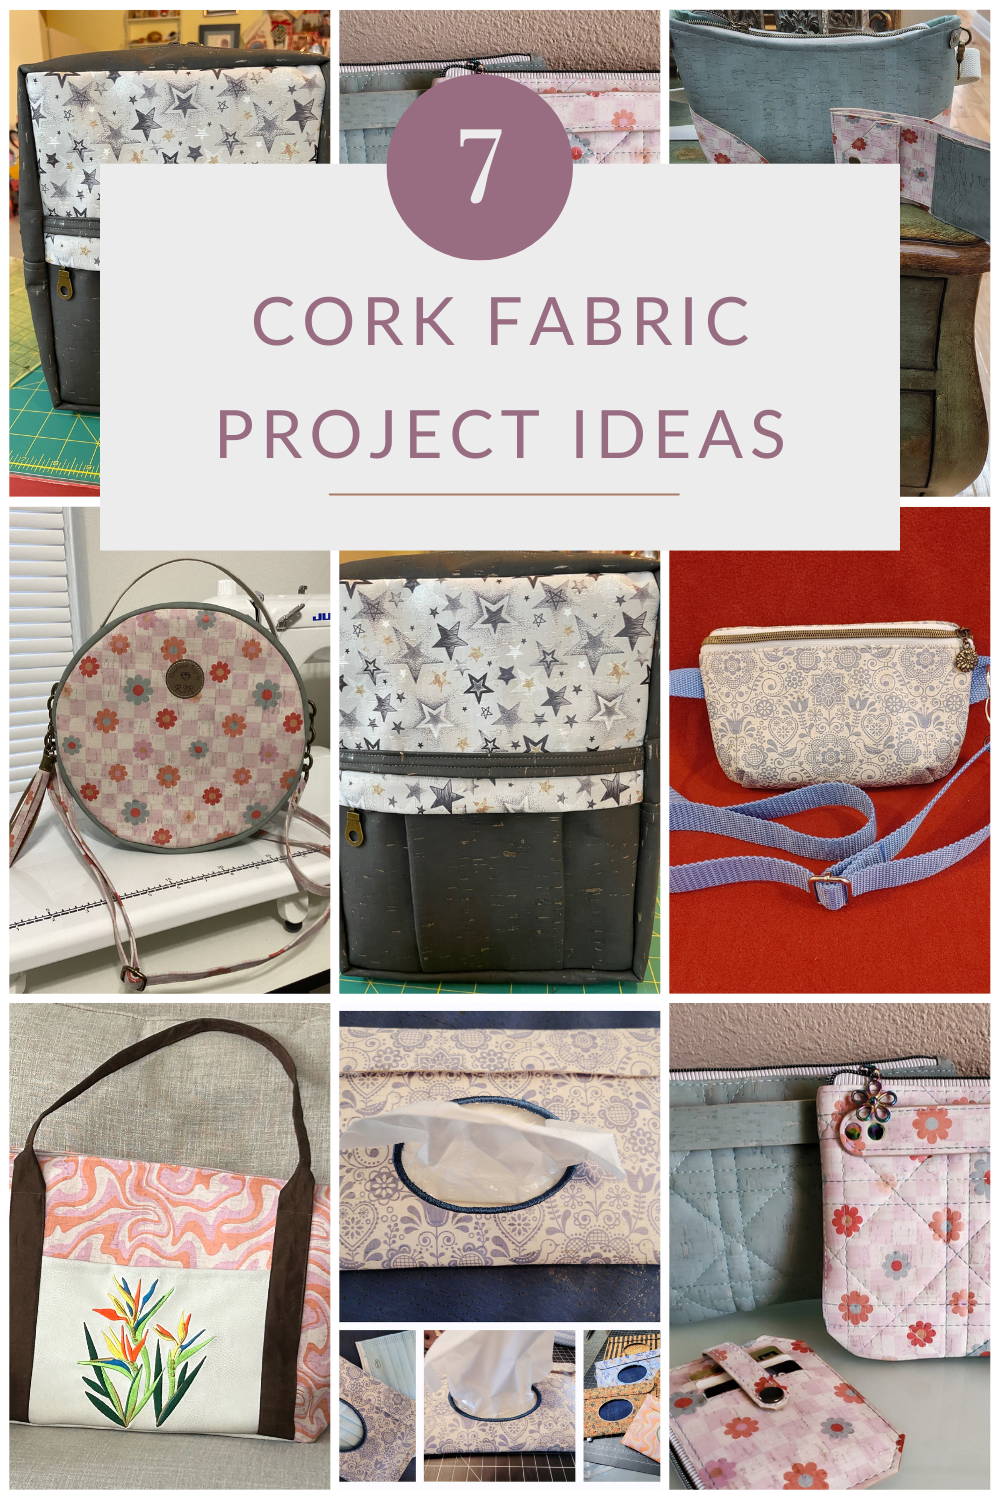 7 Cork Fabric Project Ideas!